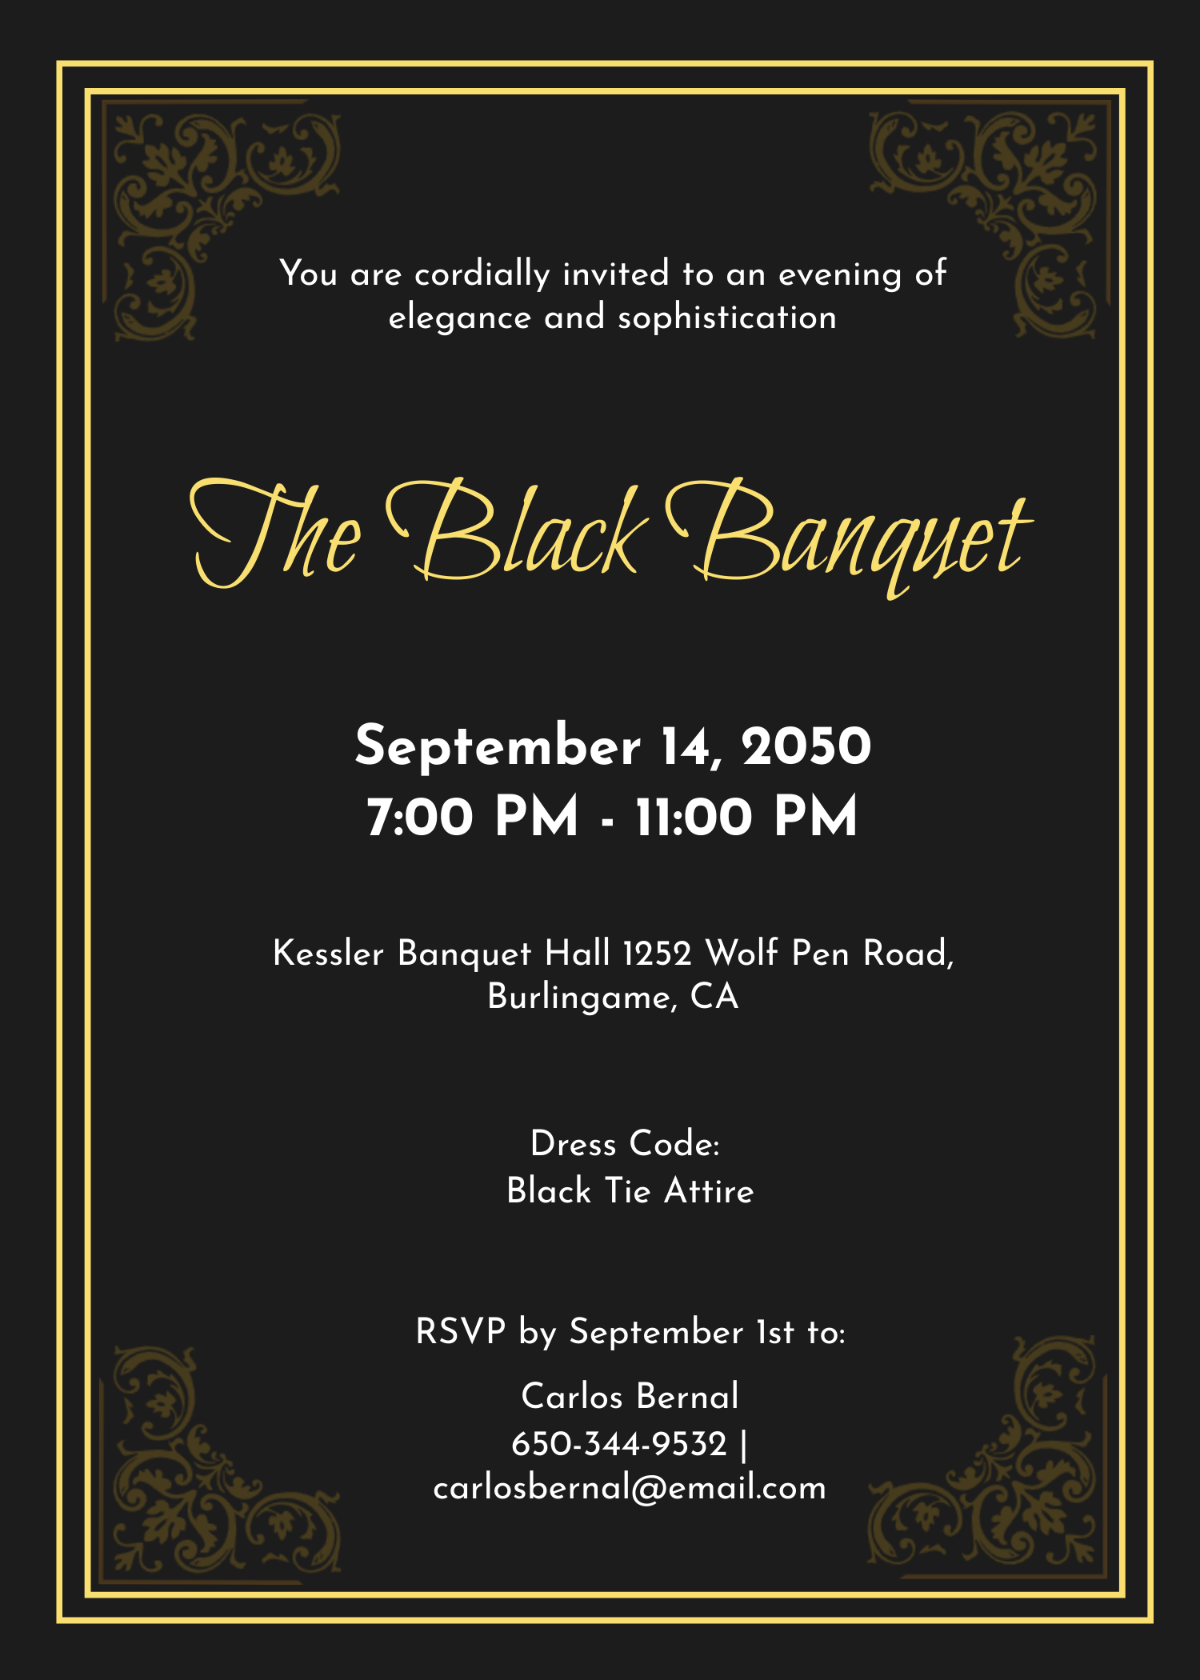 Black Banquet Invitation